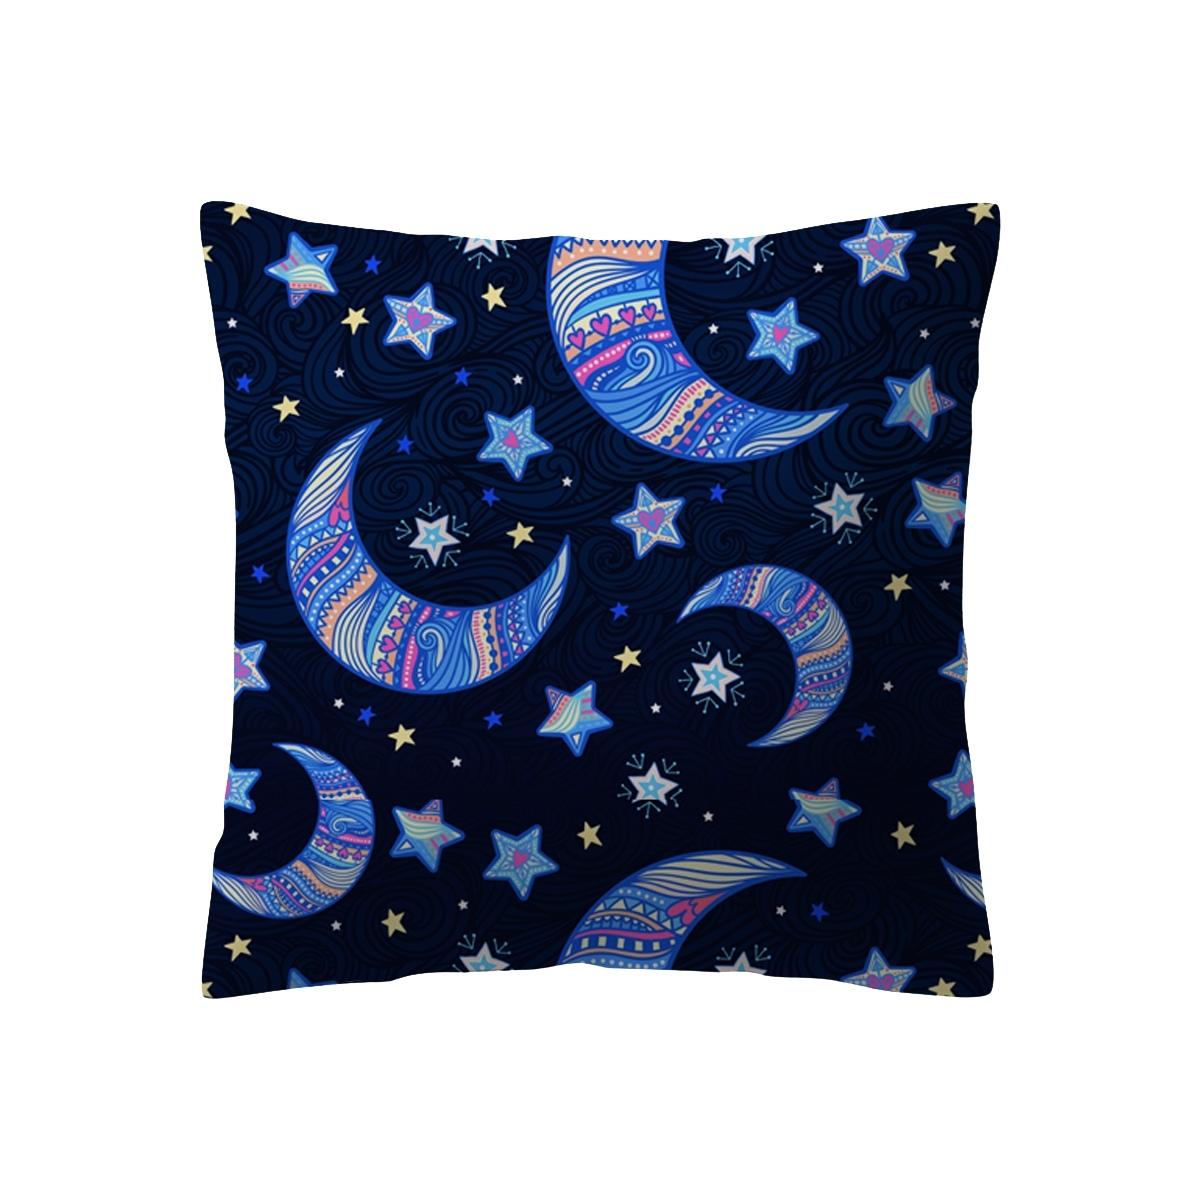 Lunar Dreams Sensory Cushion